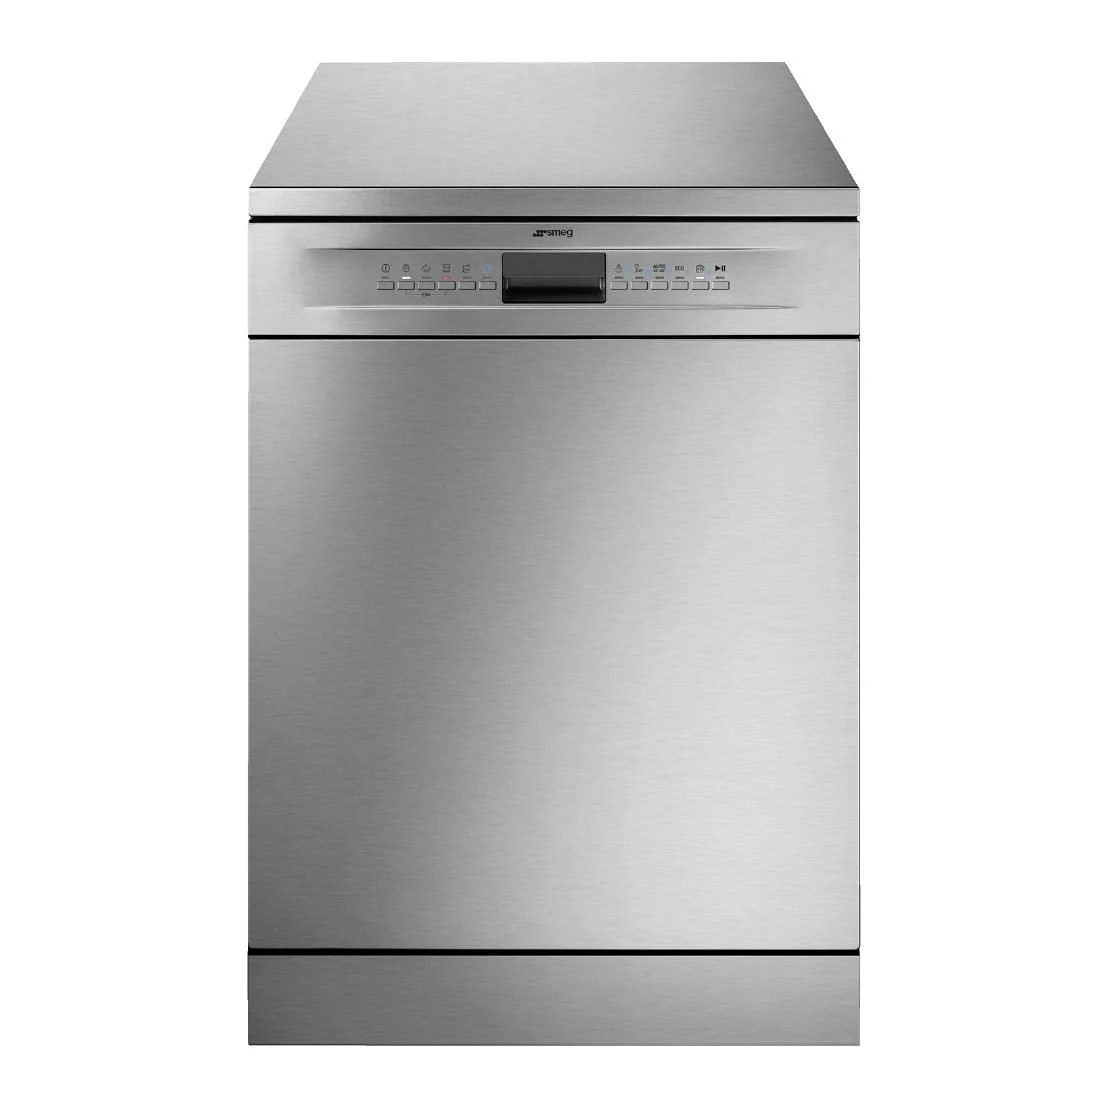 Smeg Semi-Professional Freestanding Dishwasher LVS344PM